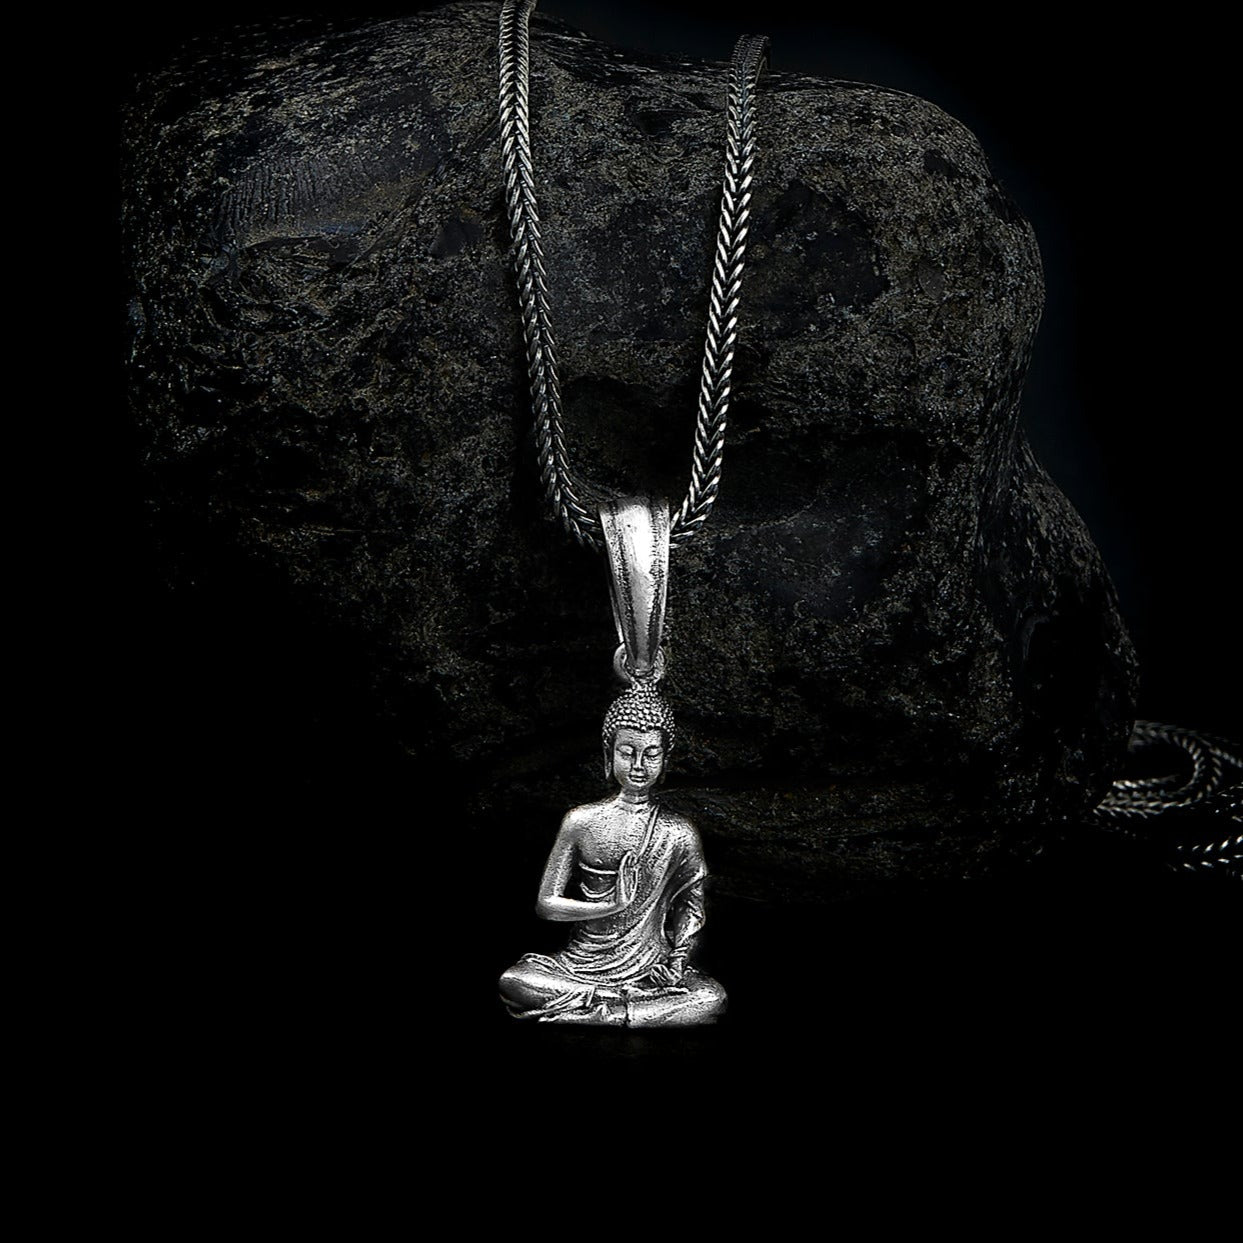 handmade sterling silver Buddha Body Necklace. Balance, wisdom, and serenity.